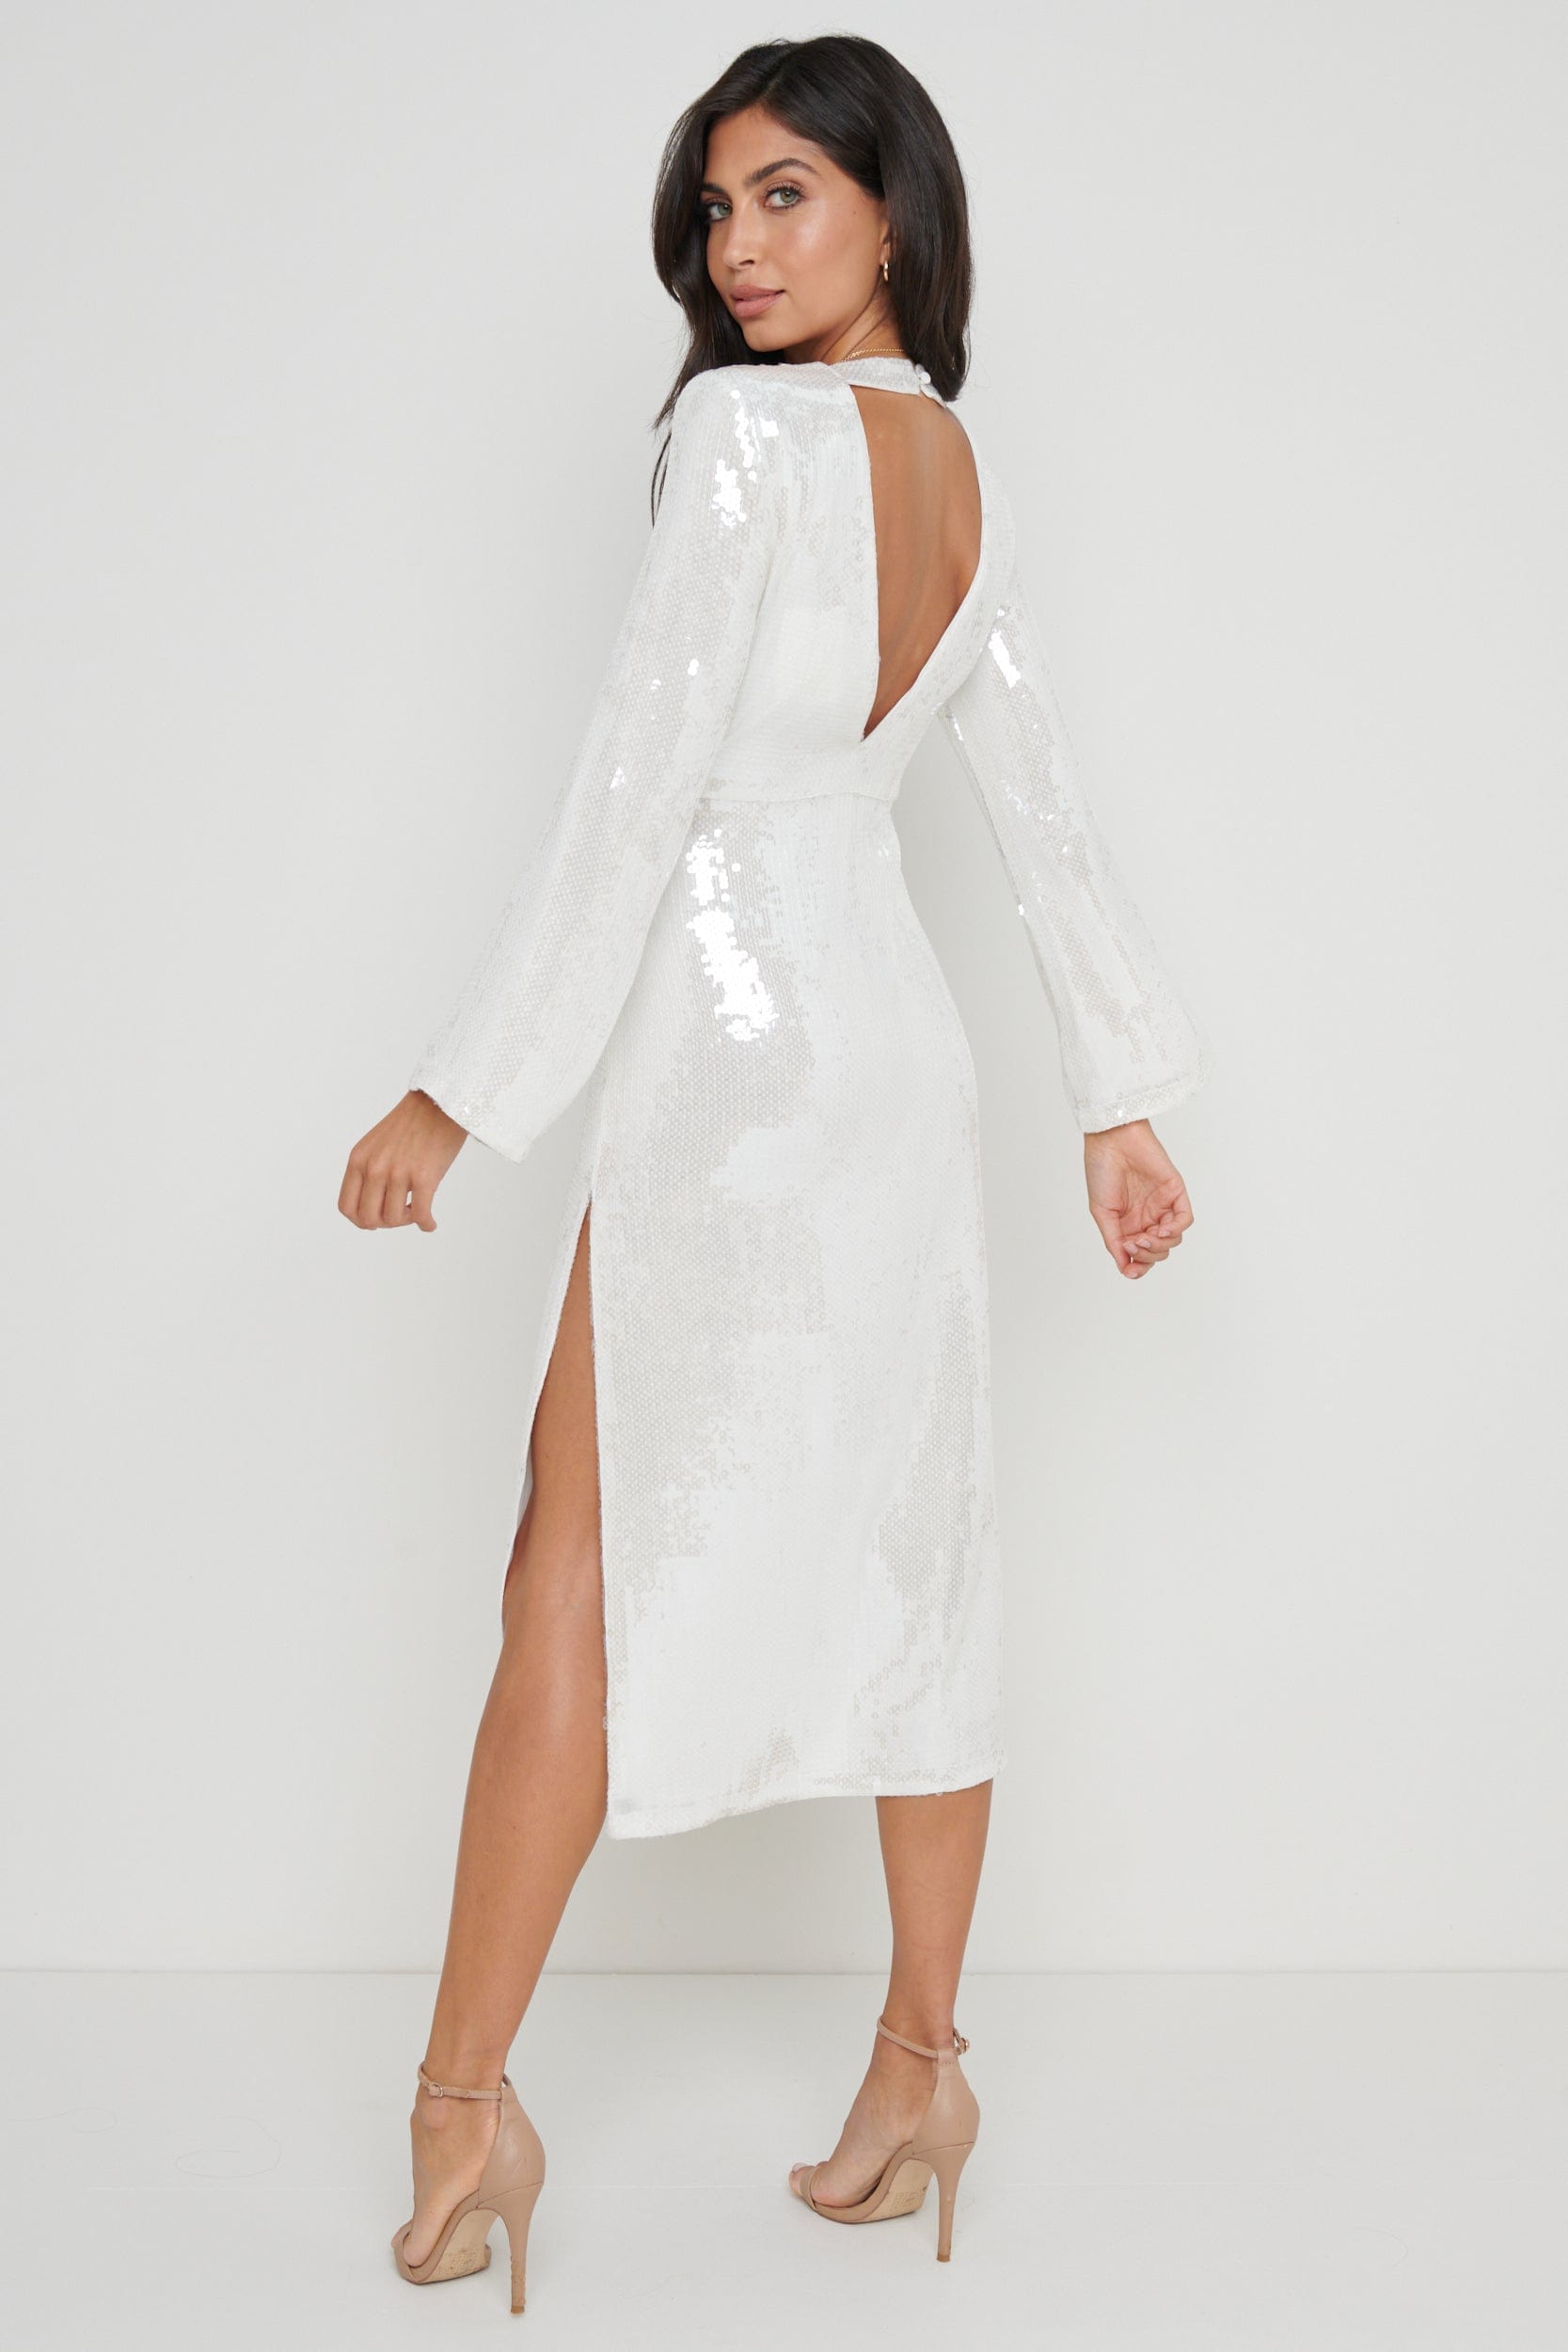 Lucia Sequin Dress - White